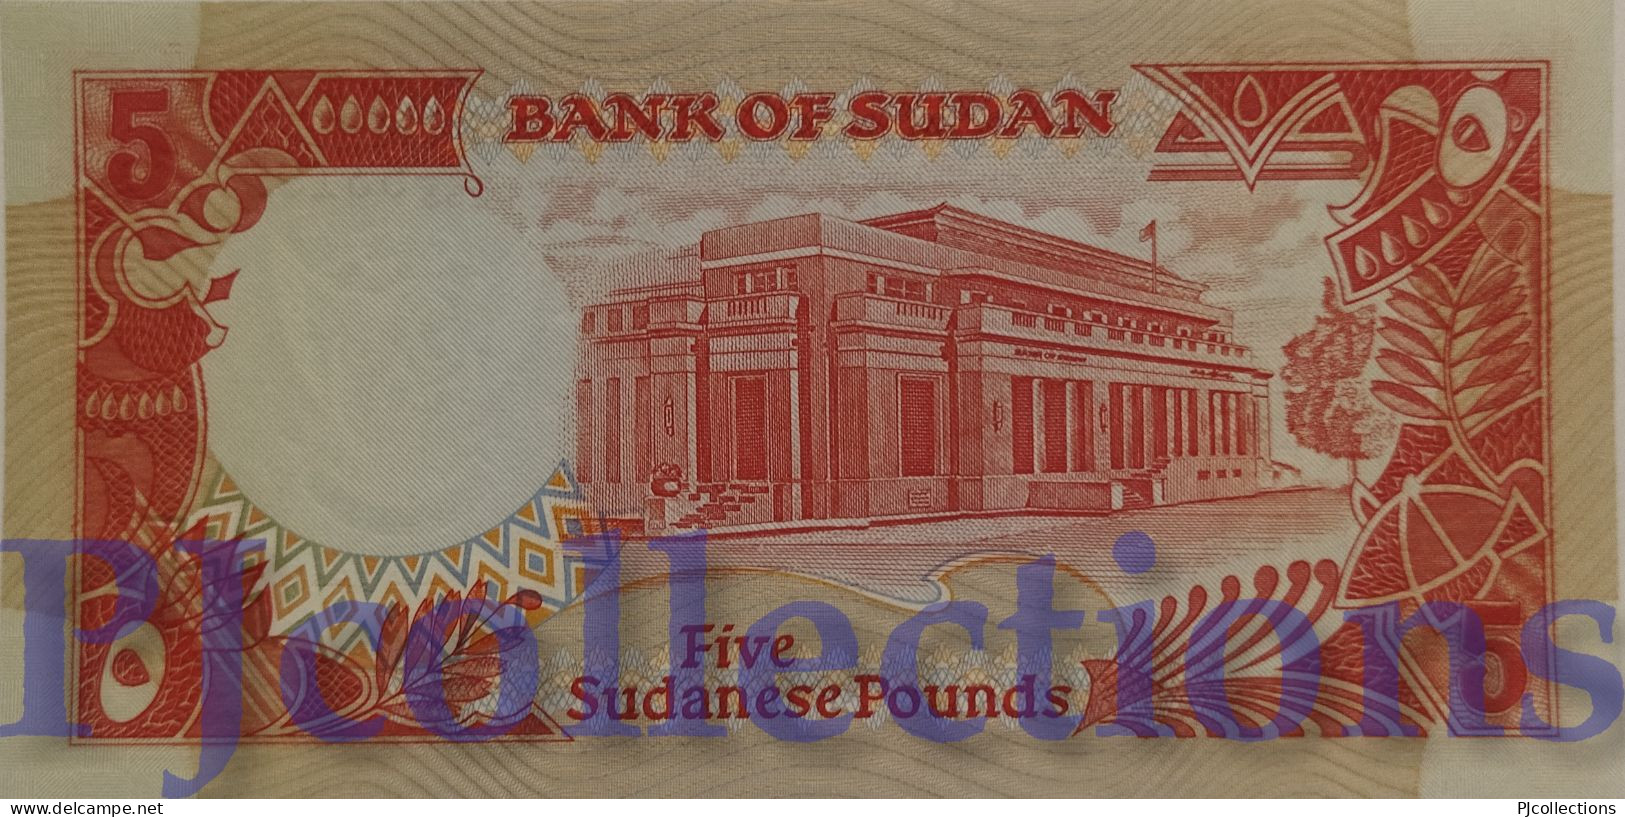 SUDAN 5 POUNDS 1991 PICK 45 AUNC - Sudan